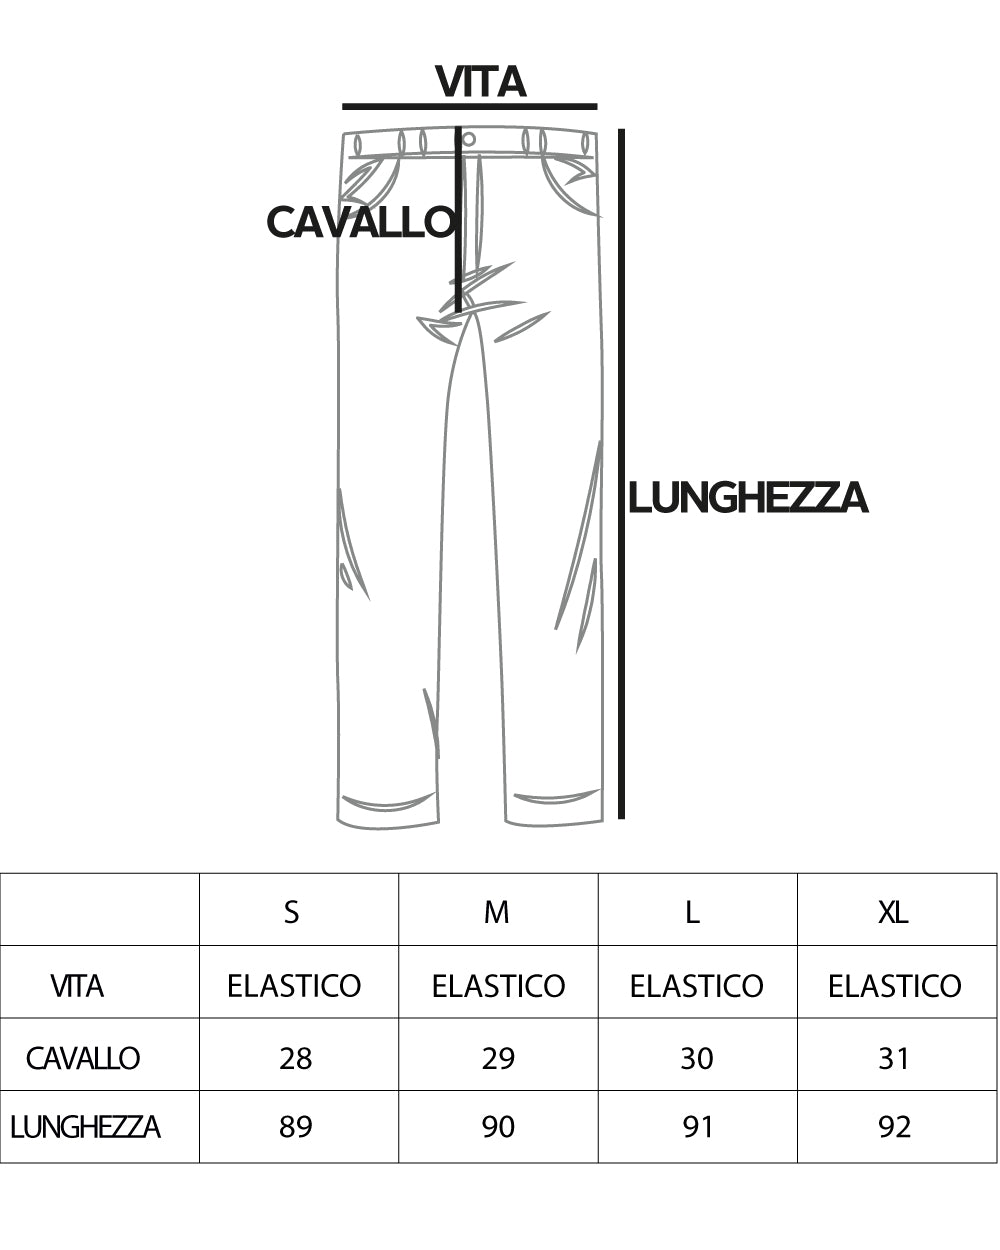 Men's Jeans Trousers Regular Fit Royal Blue Casual Knee-Length Cut GIOSAL-P5370A